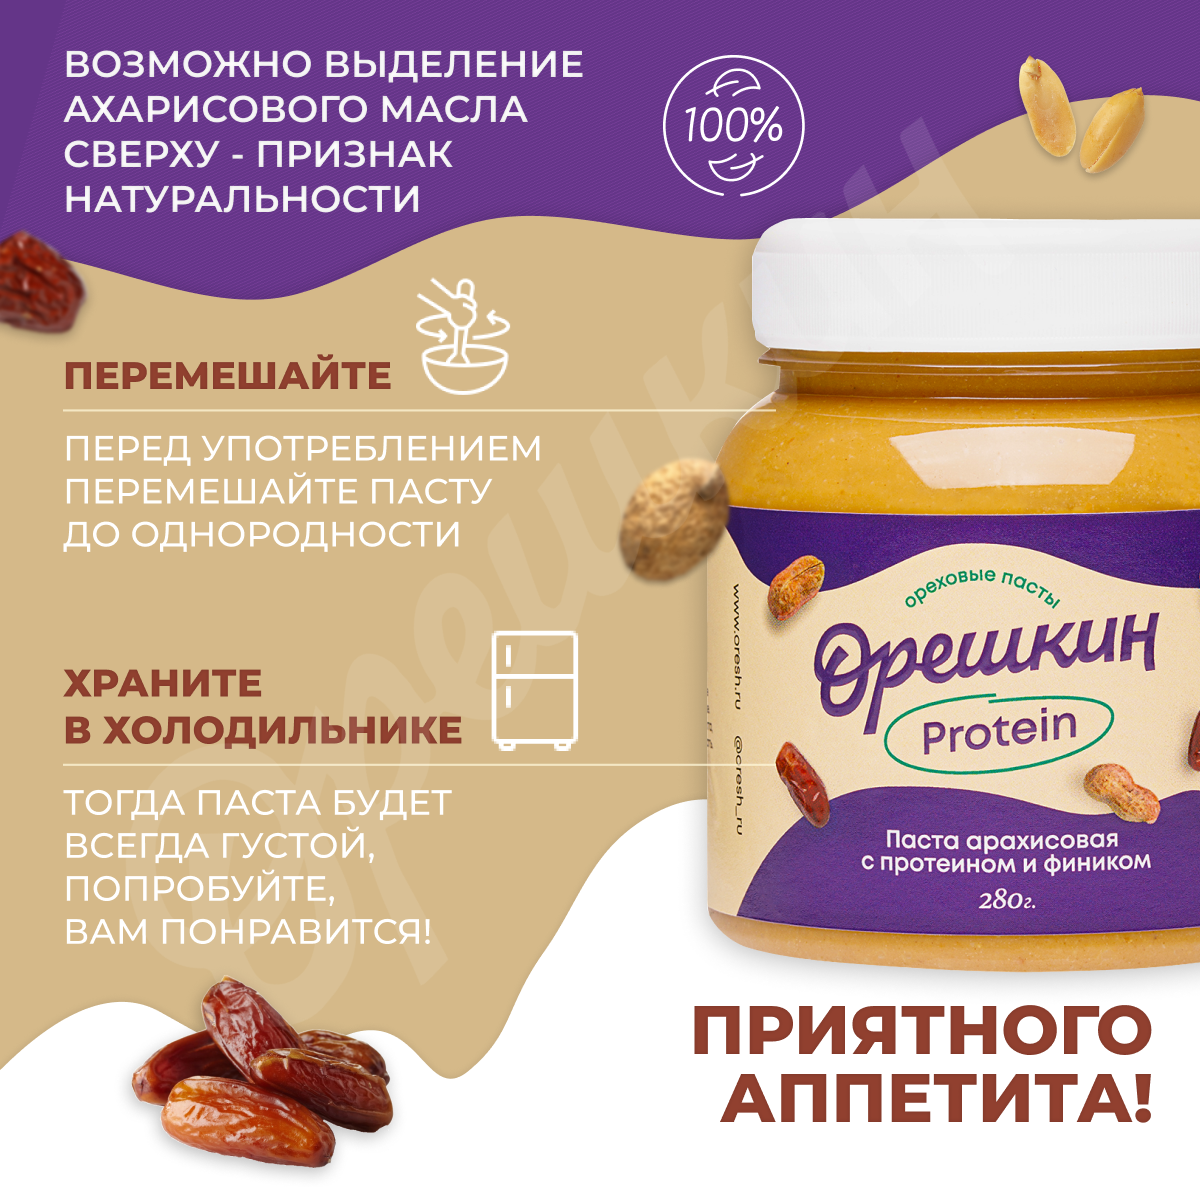 Паста арахисовая "Орешкин" Protein с протеином и фиником 280 гр - фотография № 5